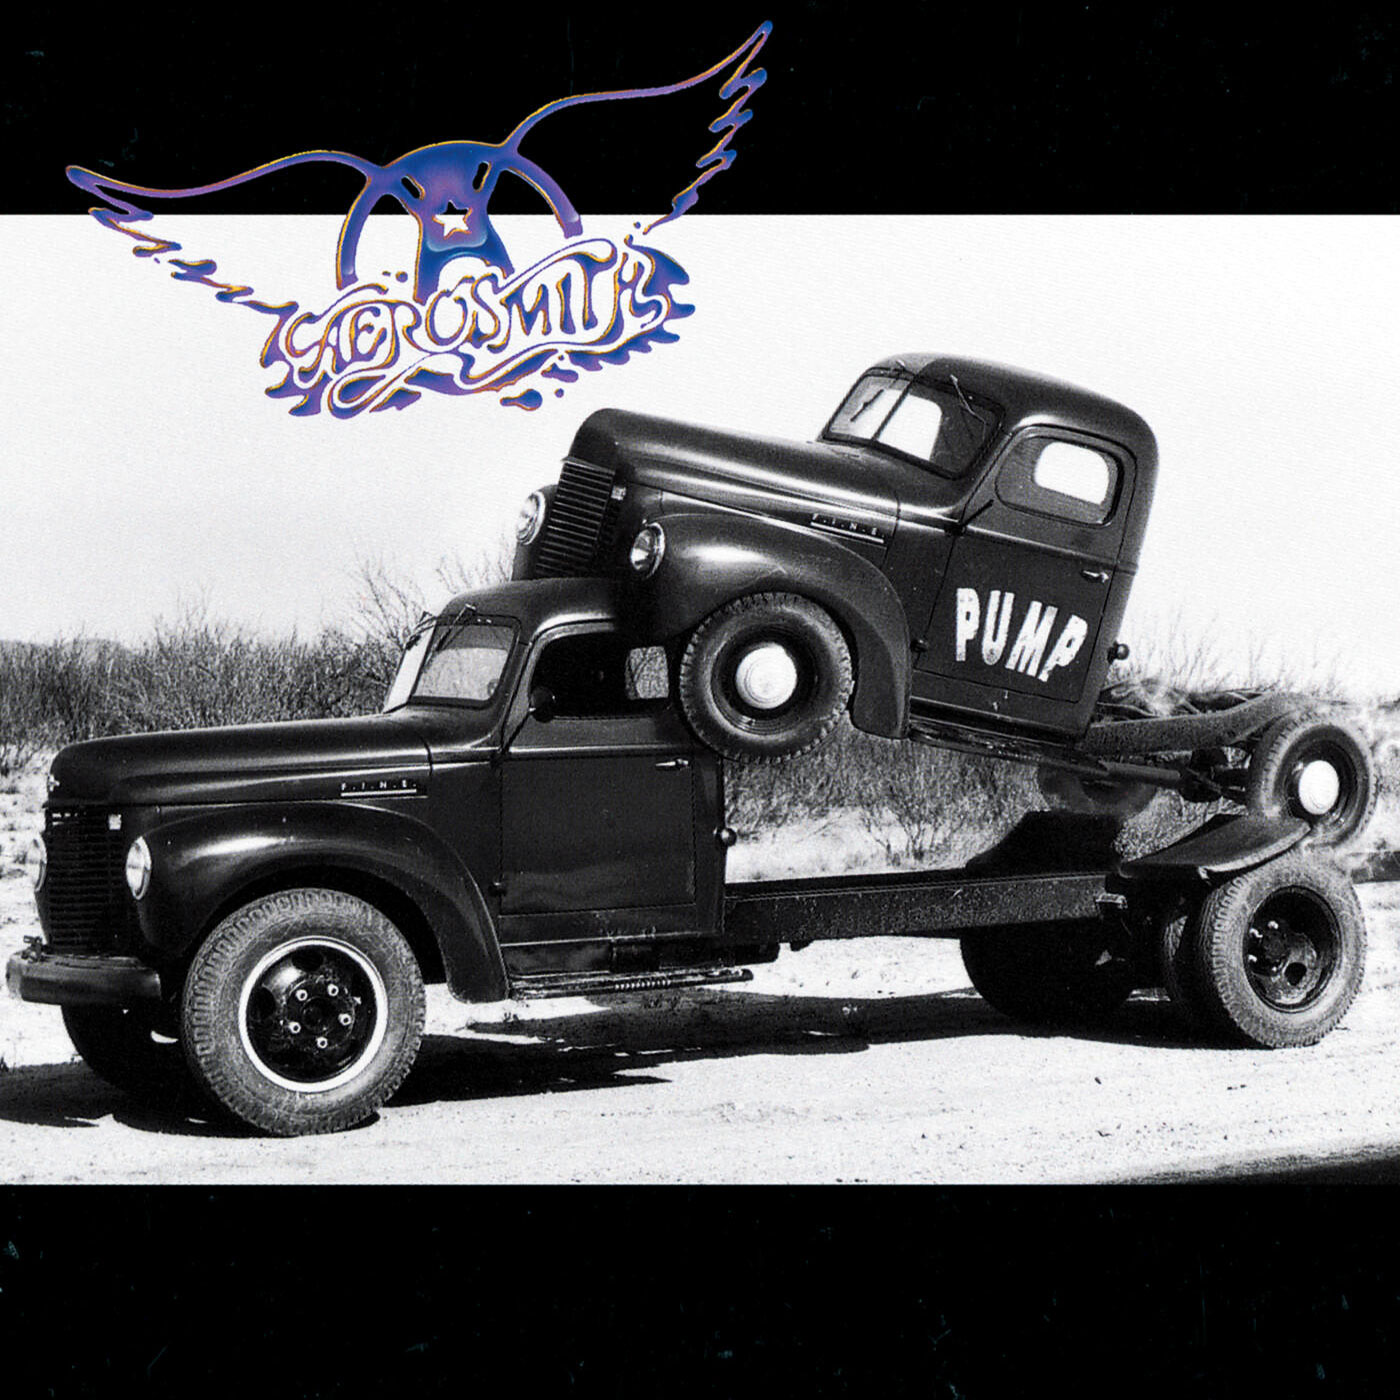 655 Aerosmith – Pump